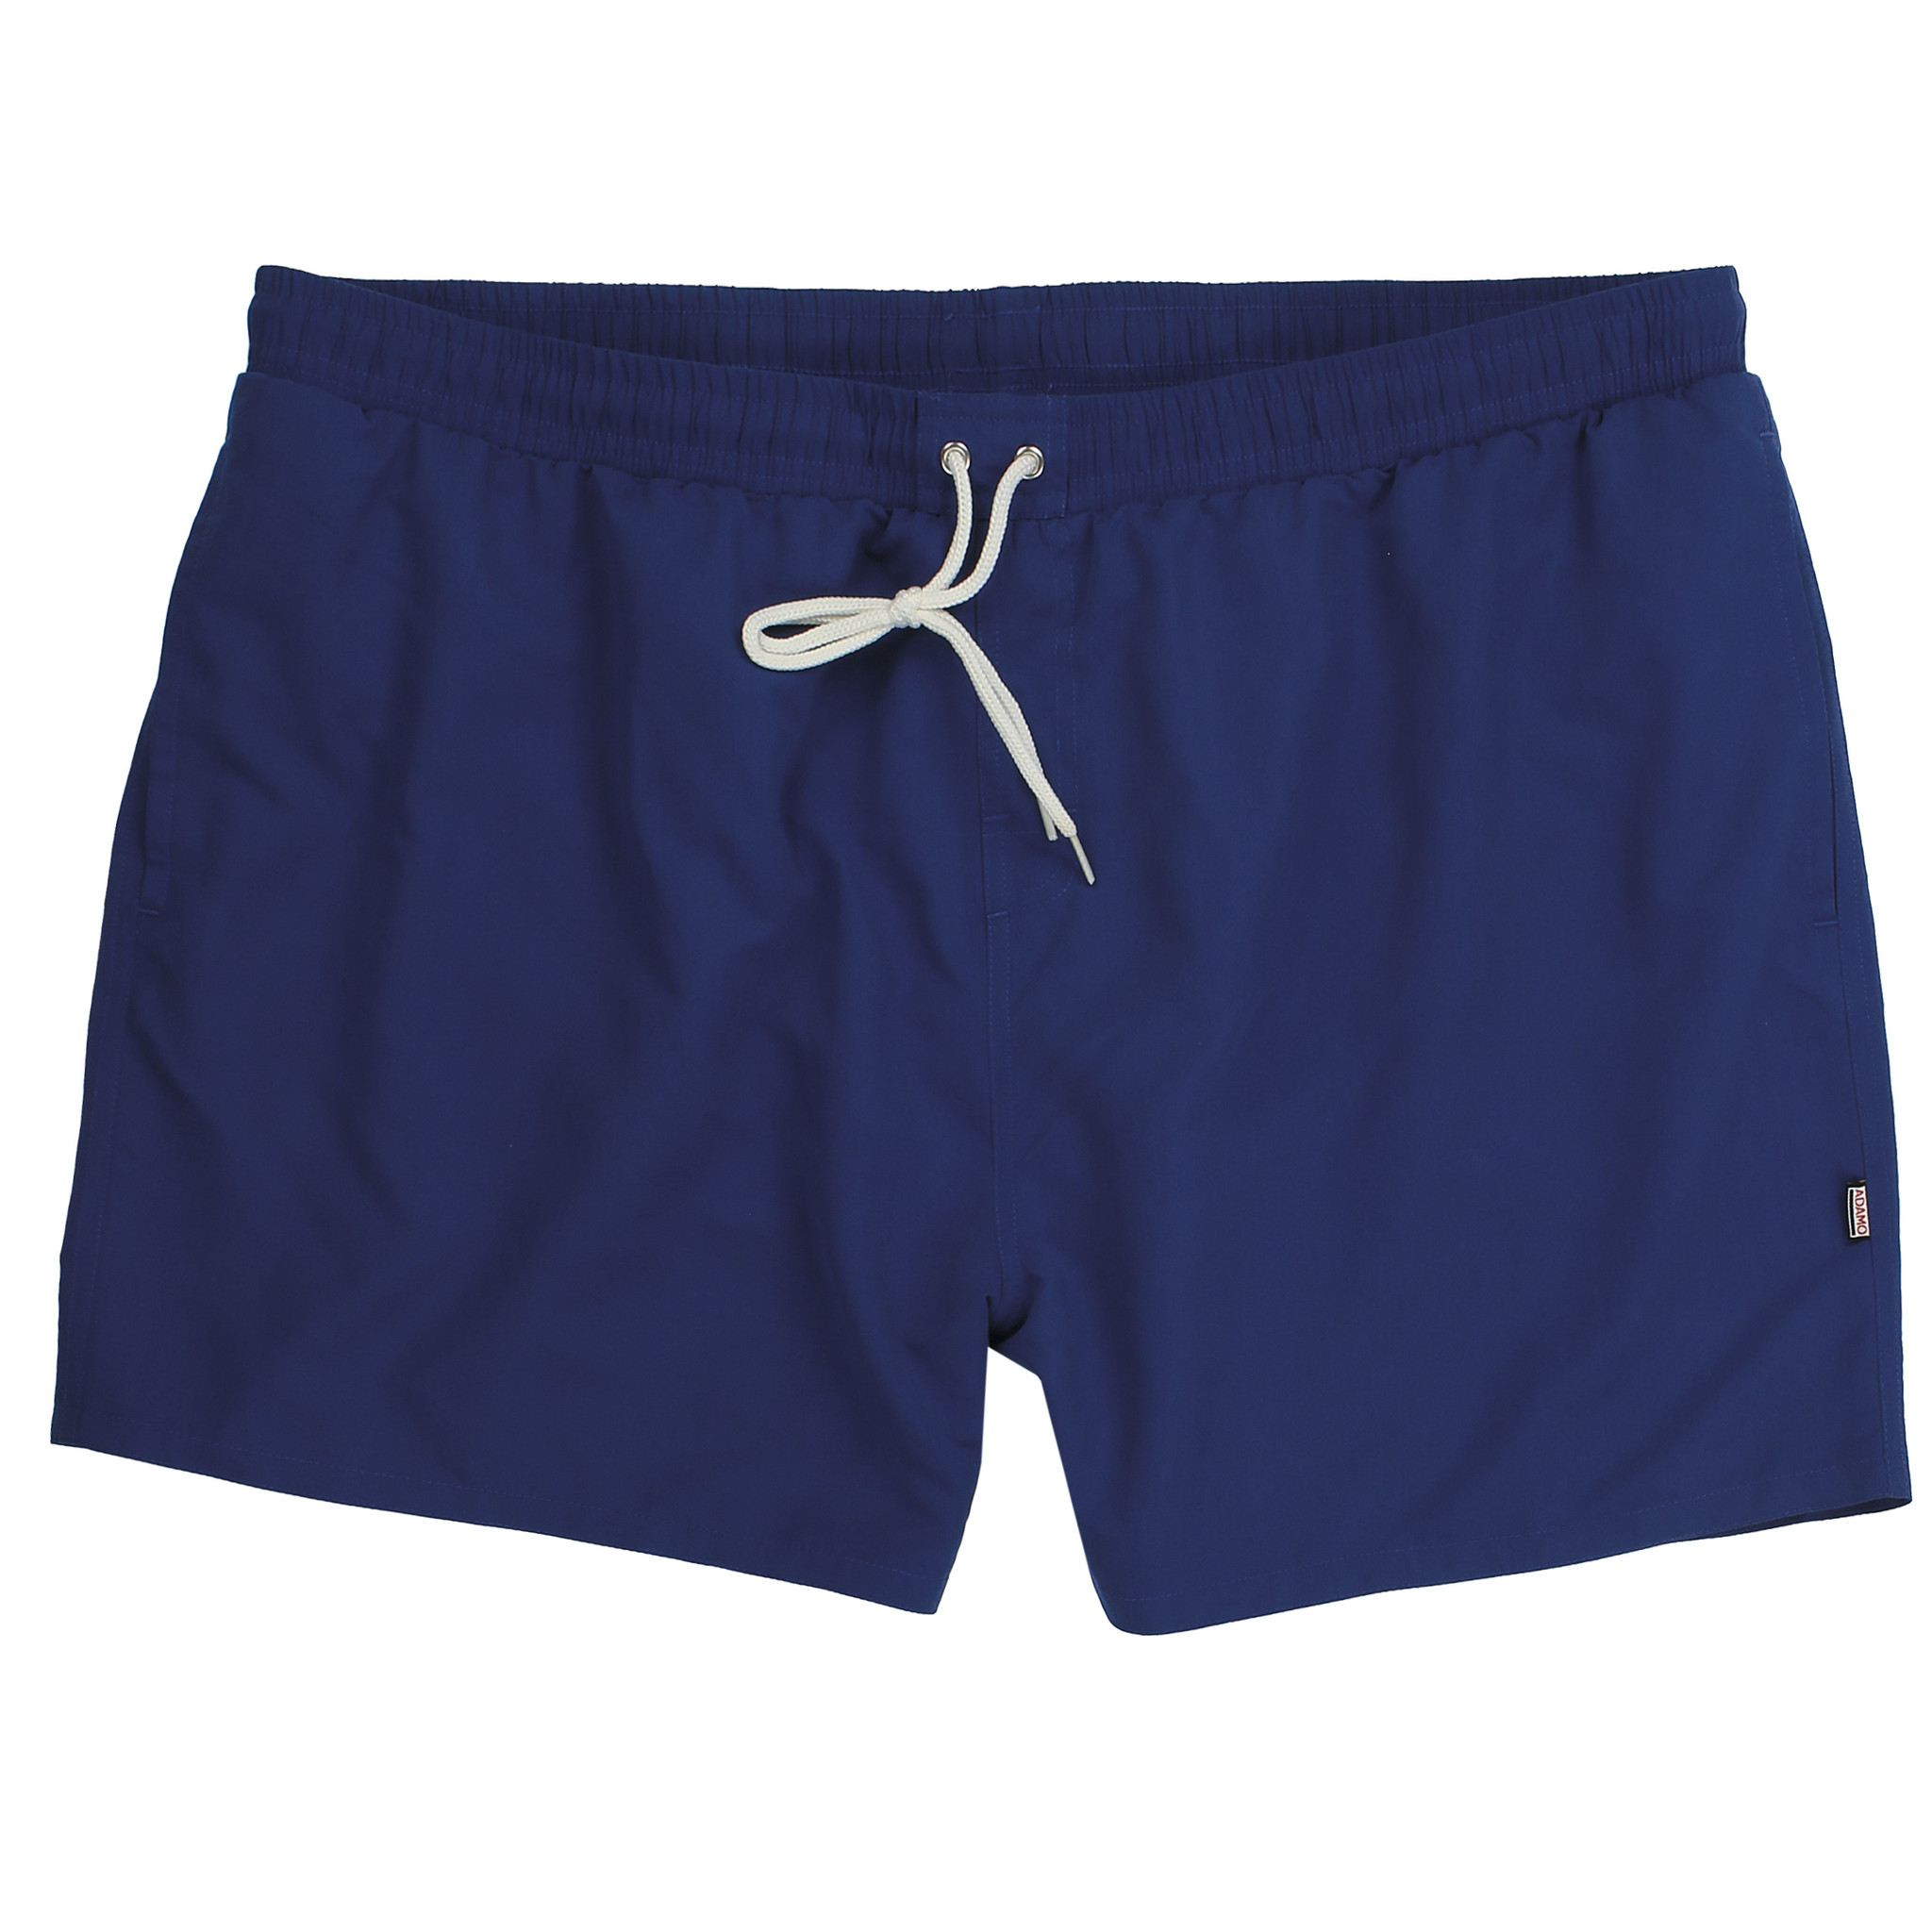 Adamo Swim shorts 141220/360 8XL - Plus sizes-men's clothing